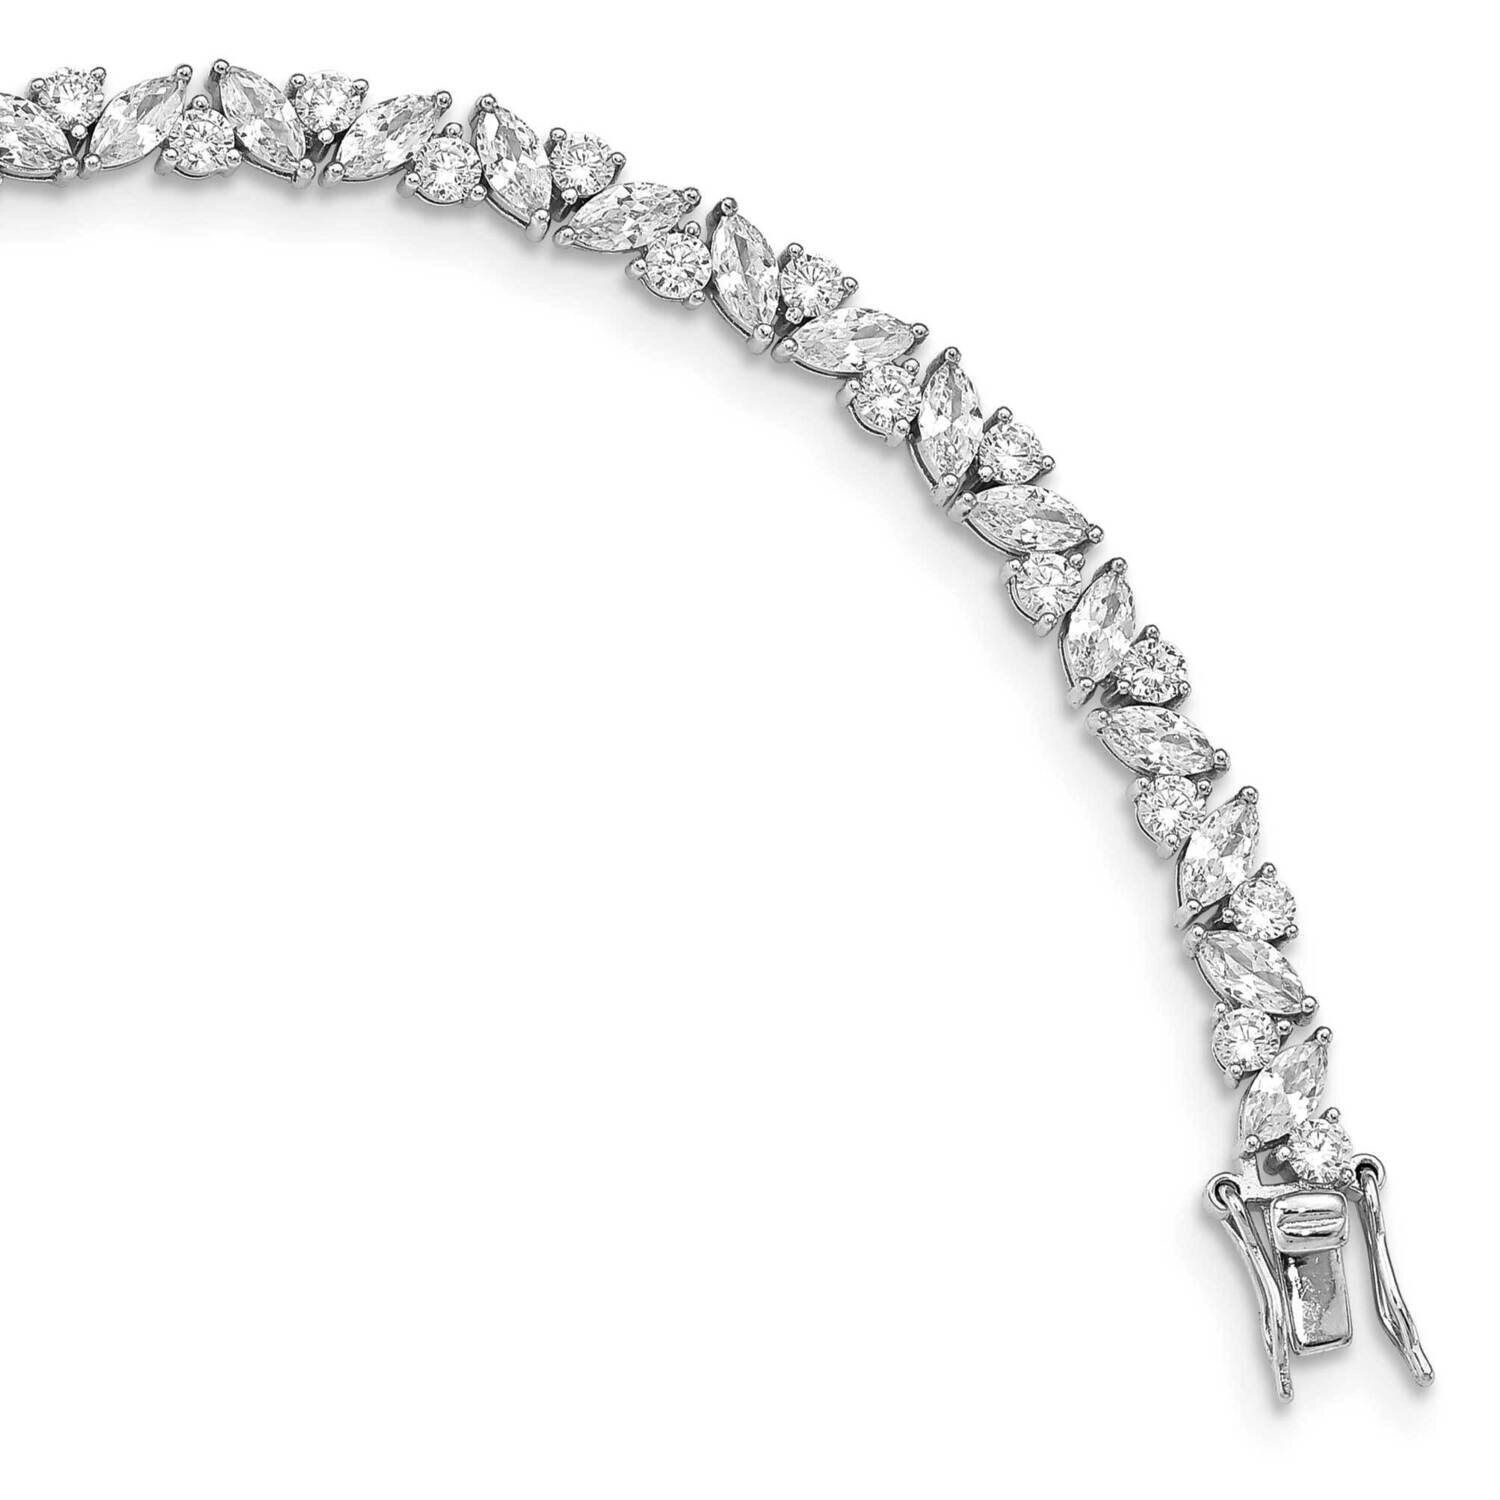 Brilliant & Marquise Cut CZ Diamond 7.25 Inch Bracelet Sterling Silver Rhodium-plated QCM1443-7.25